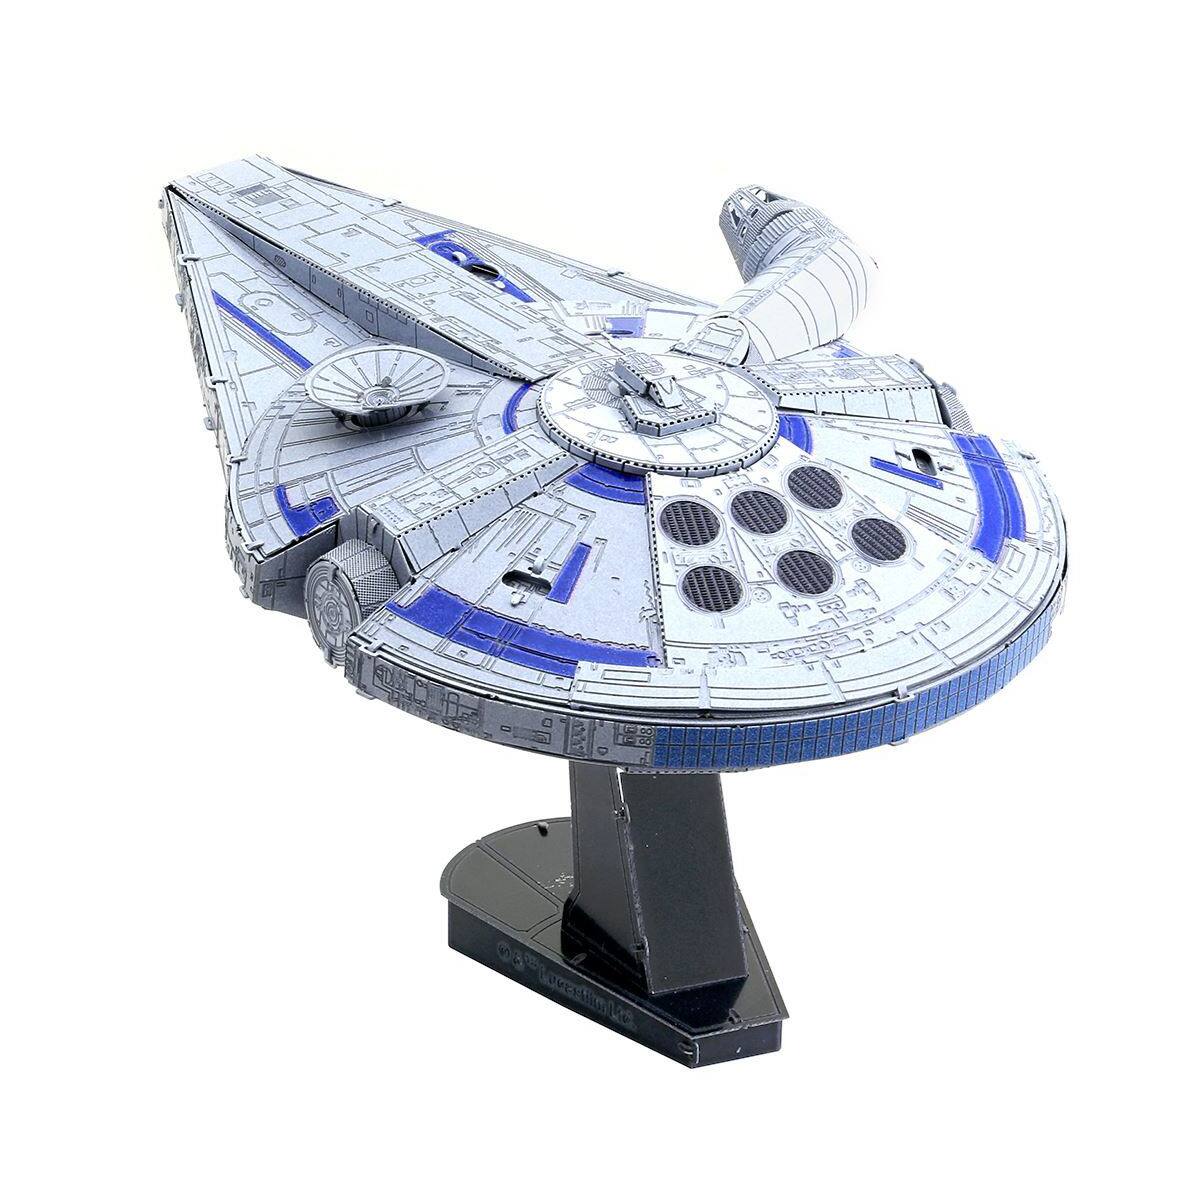 Fascinations ICONX Star Wars Solo Lando's Millennium Falcon 3d Metal Model Kit for sale online 